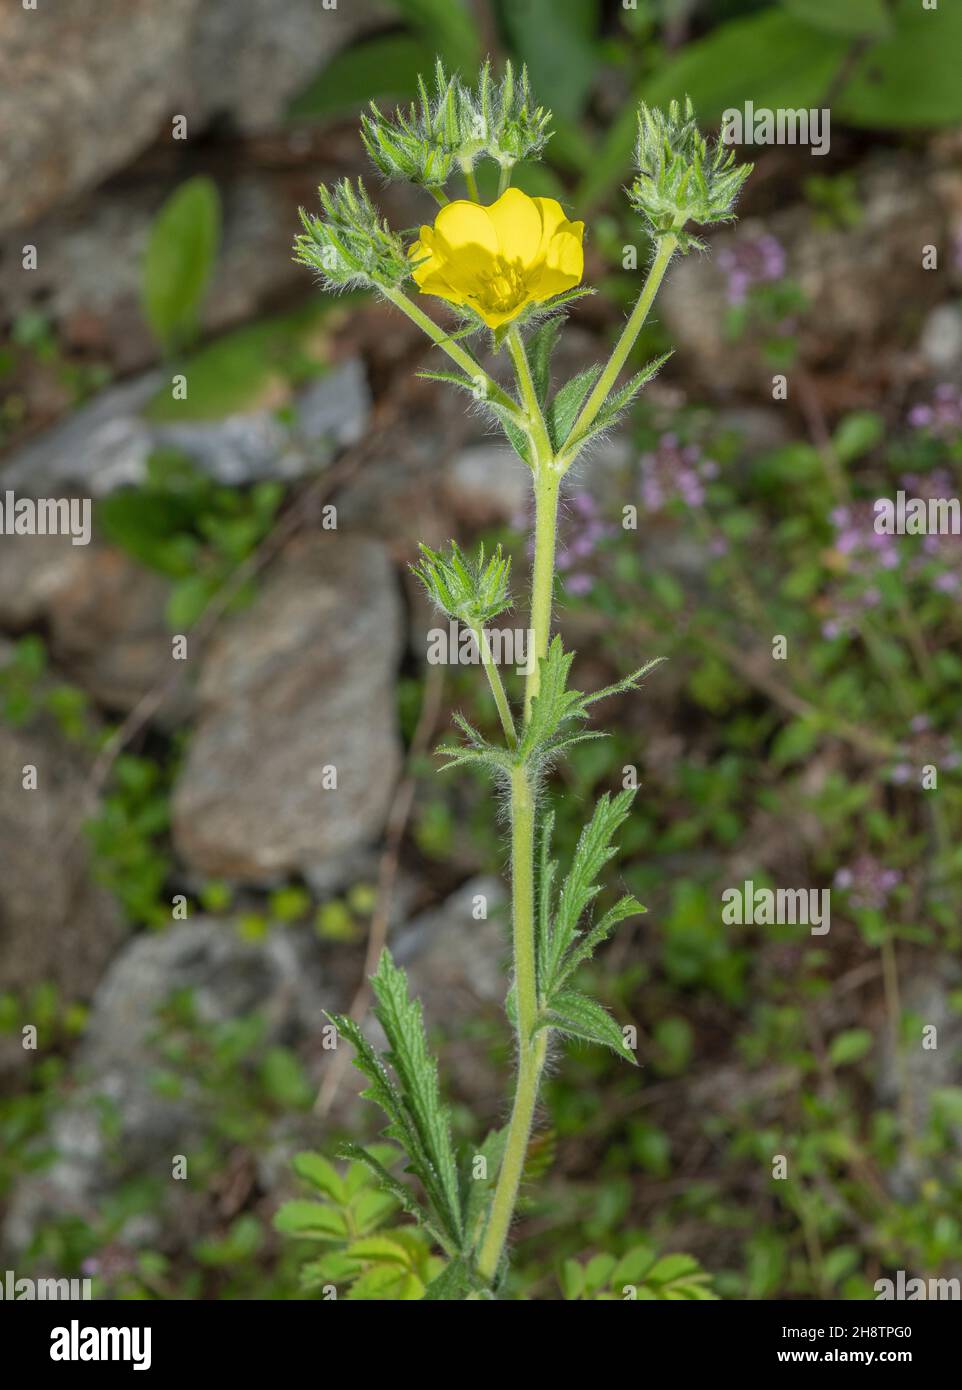 Sulphur cinquefoil, Potentilla recta in flower. Stock Photo